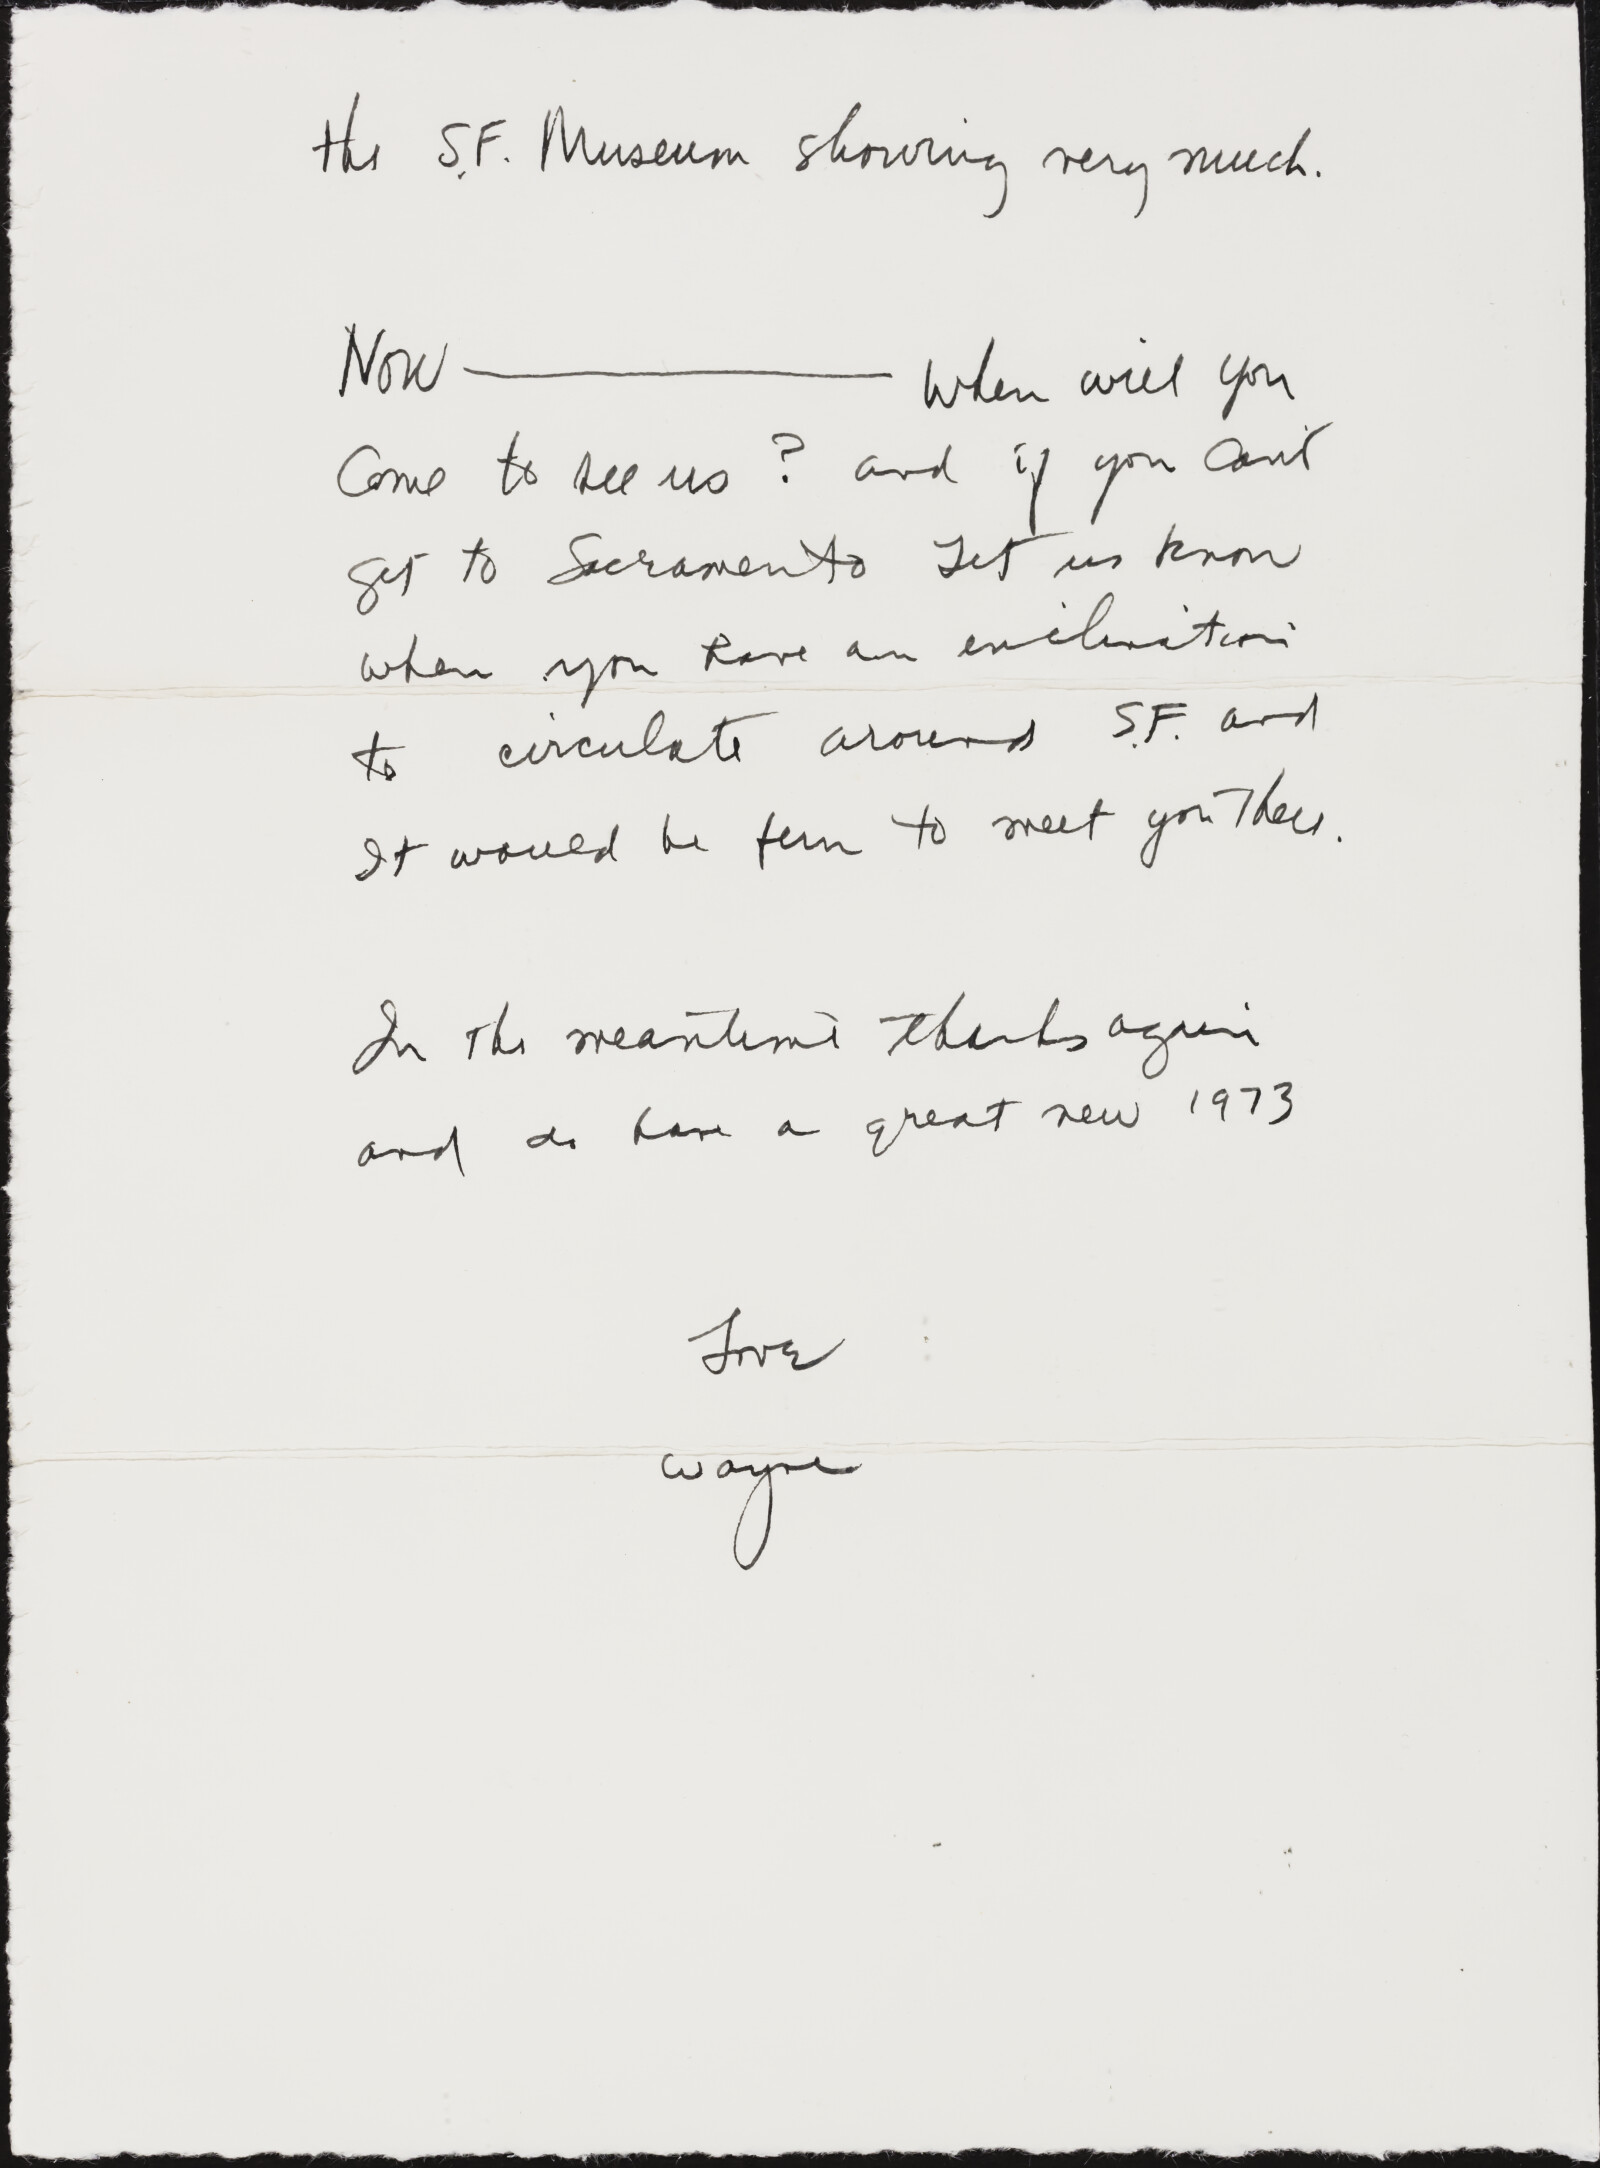 Correspondence from Wayne Thiebaud to Richard and Phyllis Diebenkorn